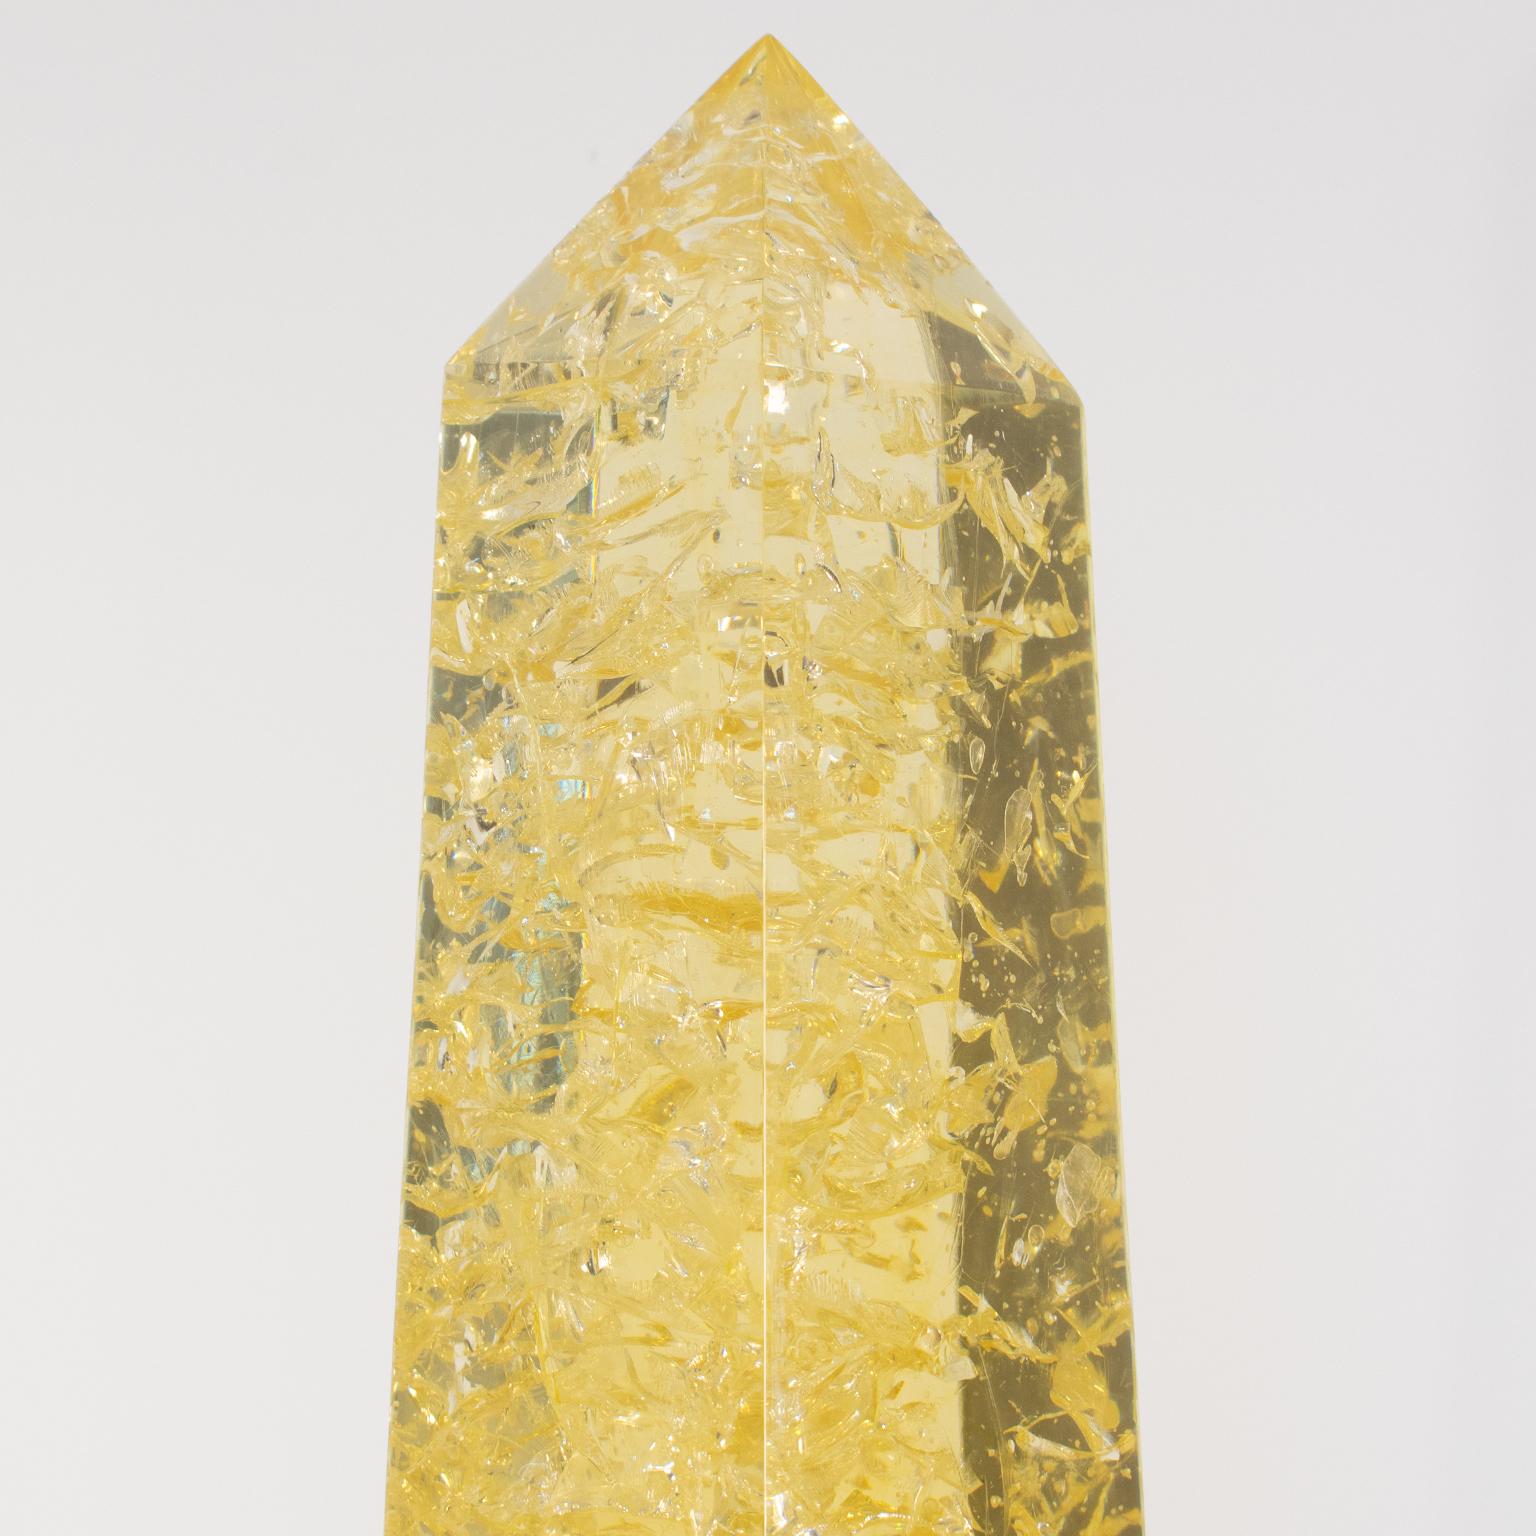 Oversized Yellow Fractal Resin Obelisk by Pierre Giraudon, 1970s For Sale 1